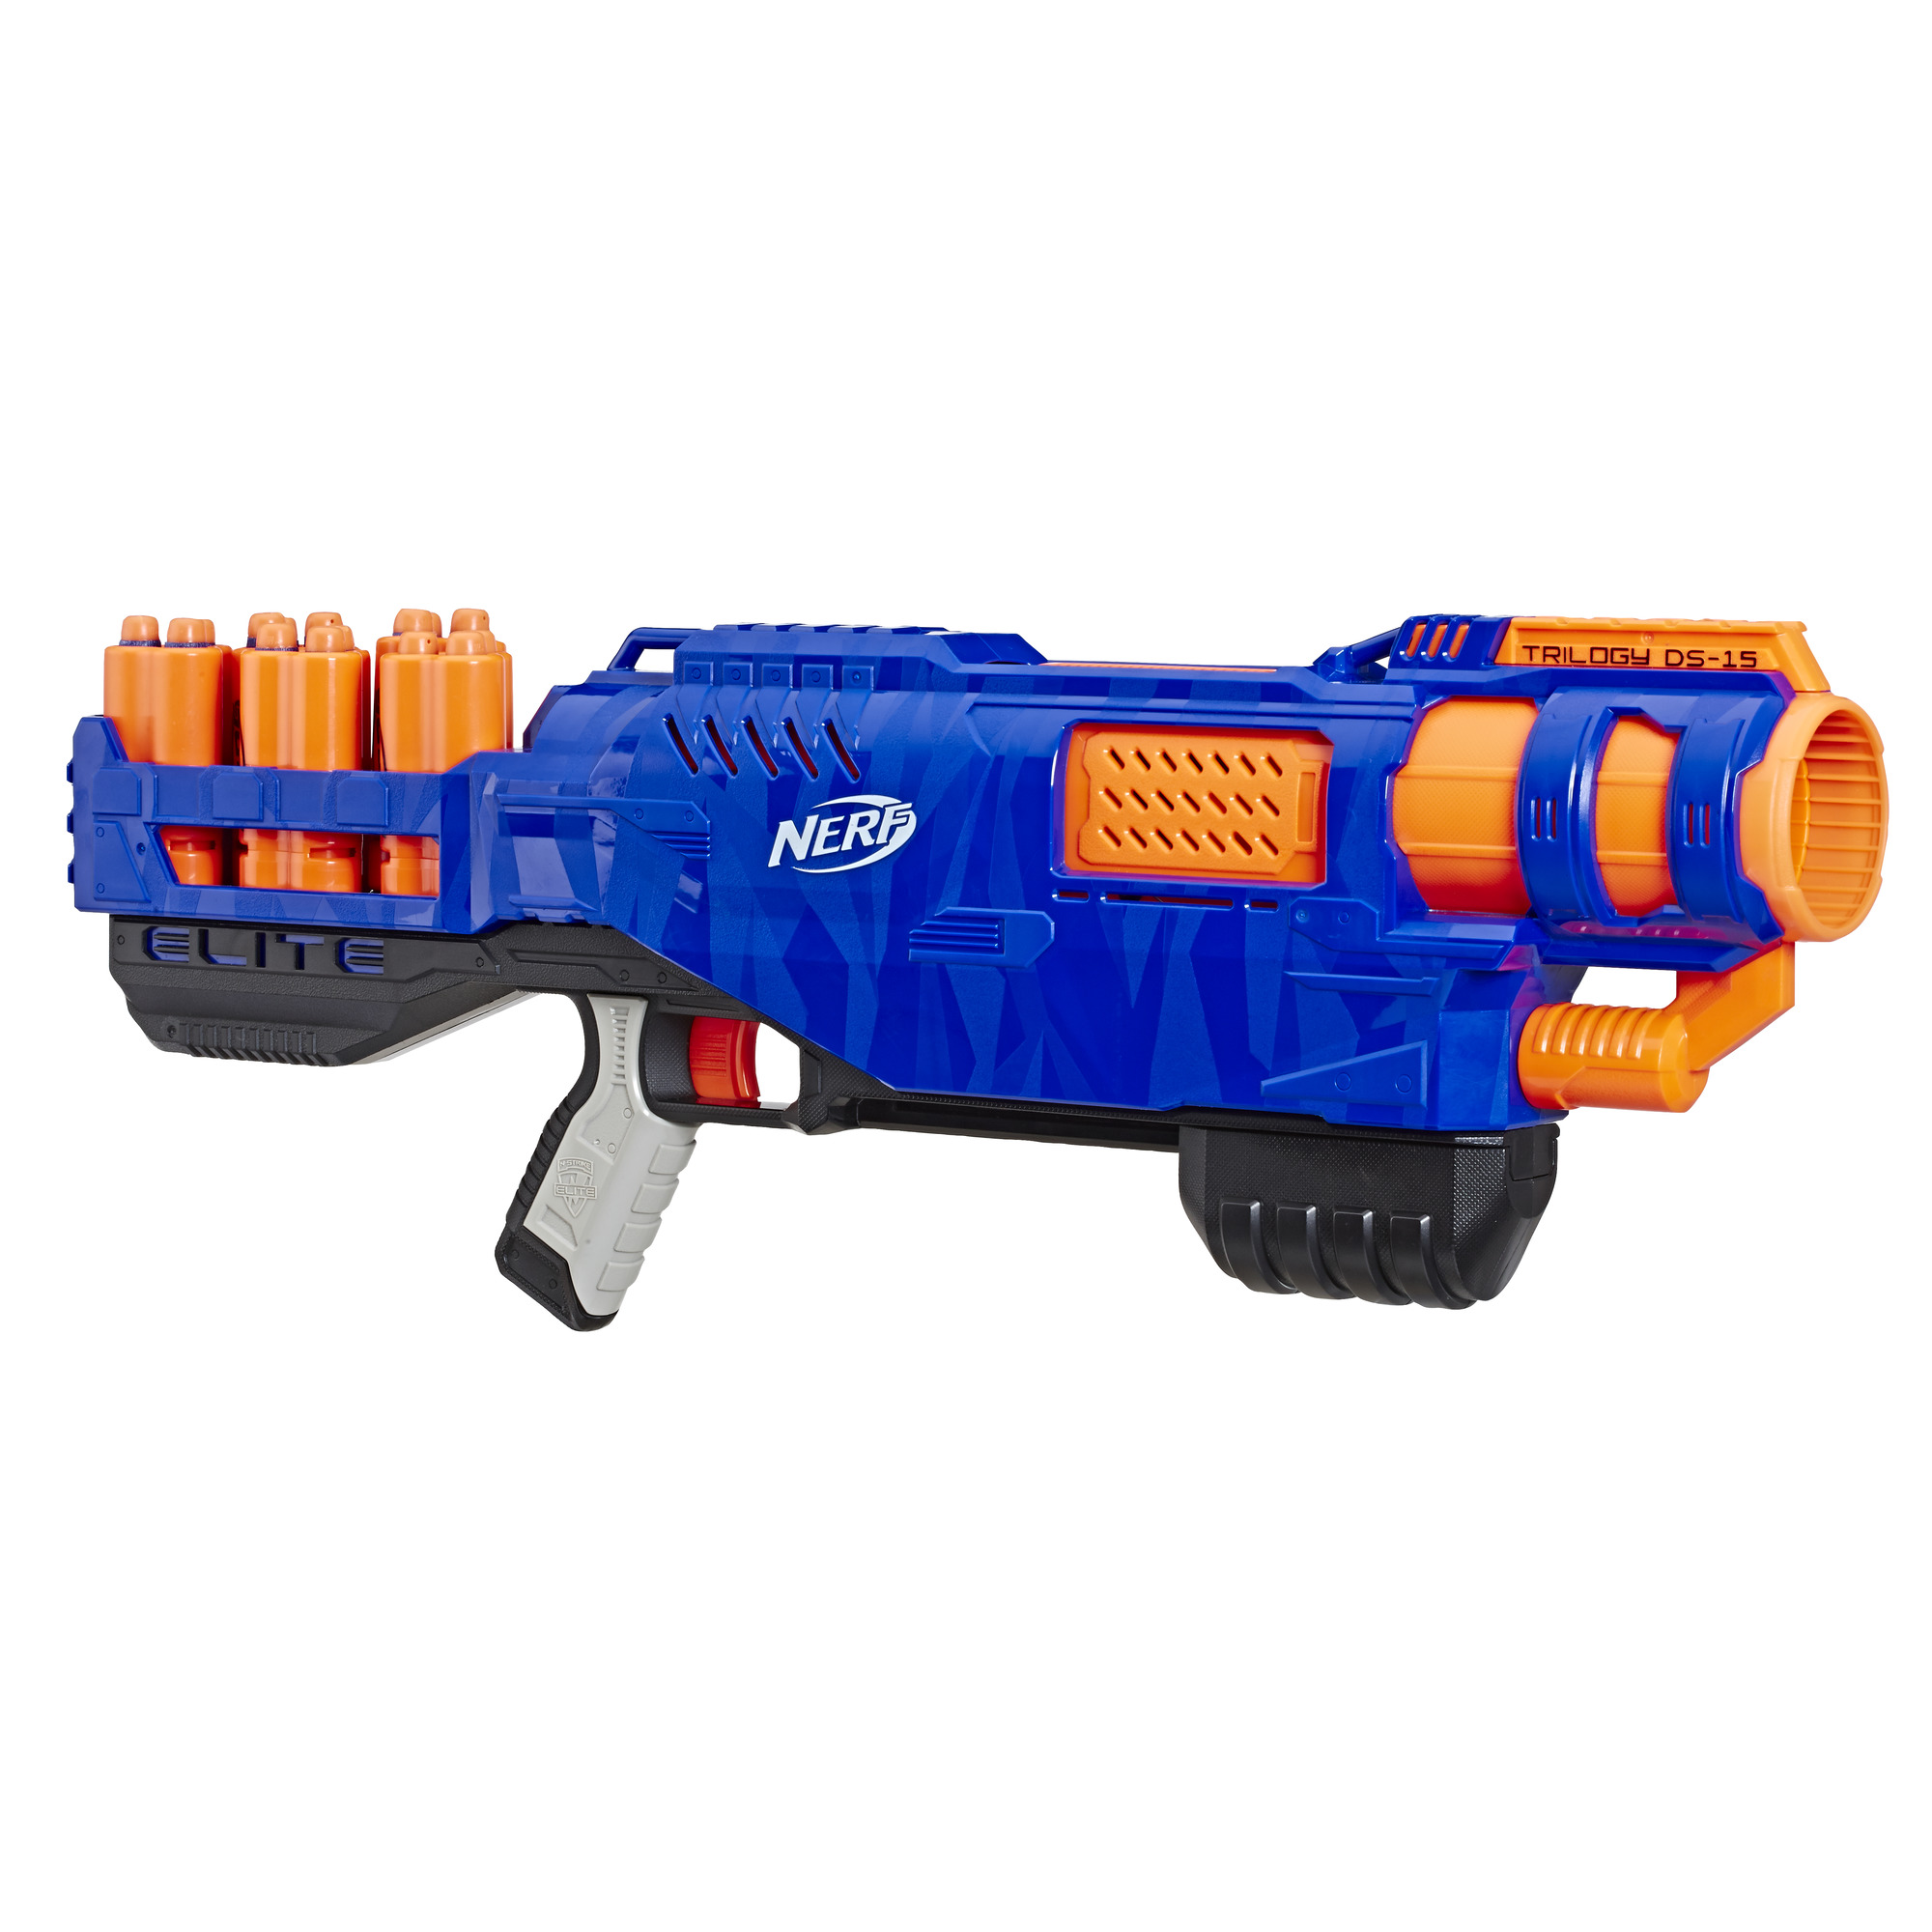 Nerf Blaster Toys Walmart Com - big size gun roblox